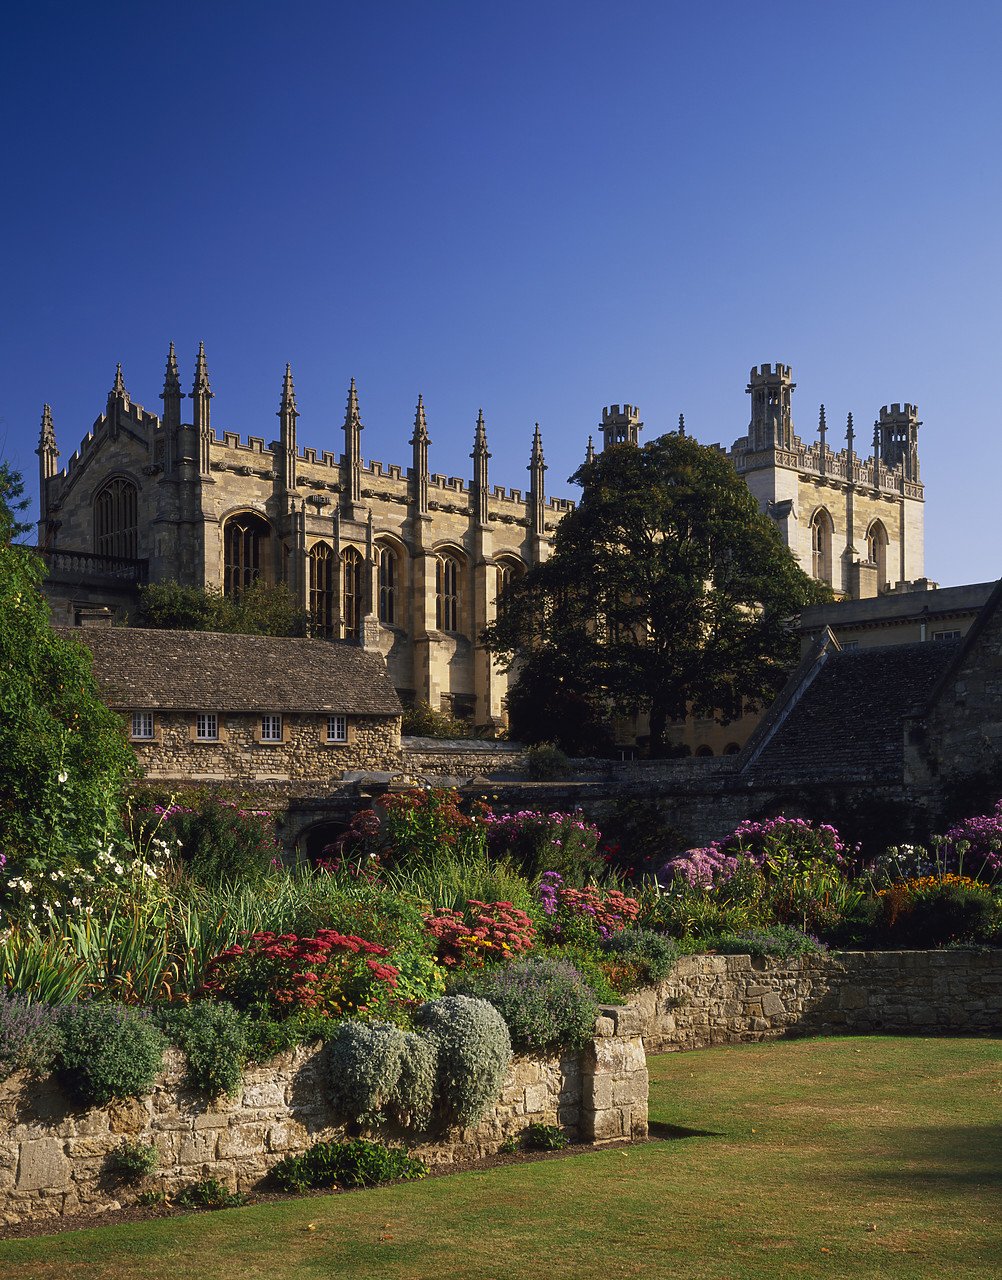 #966165-3 - Christ Church, Oxford, Oxfordshire, England